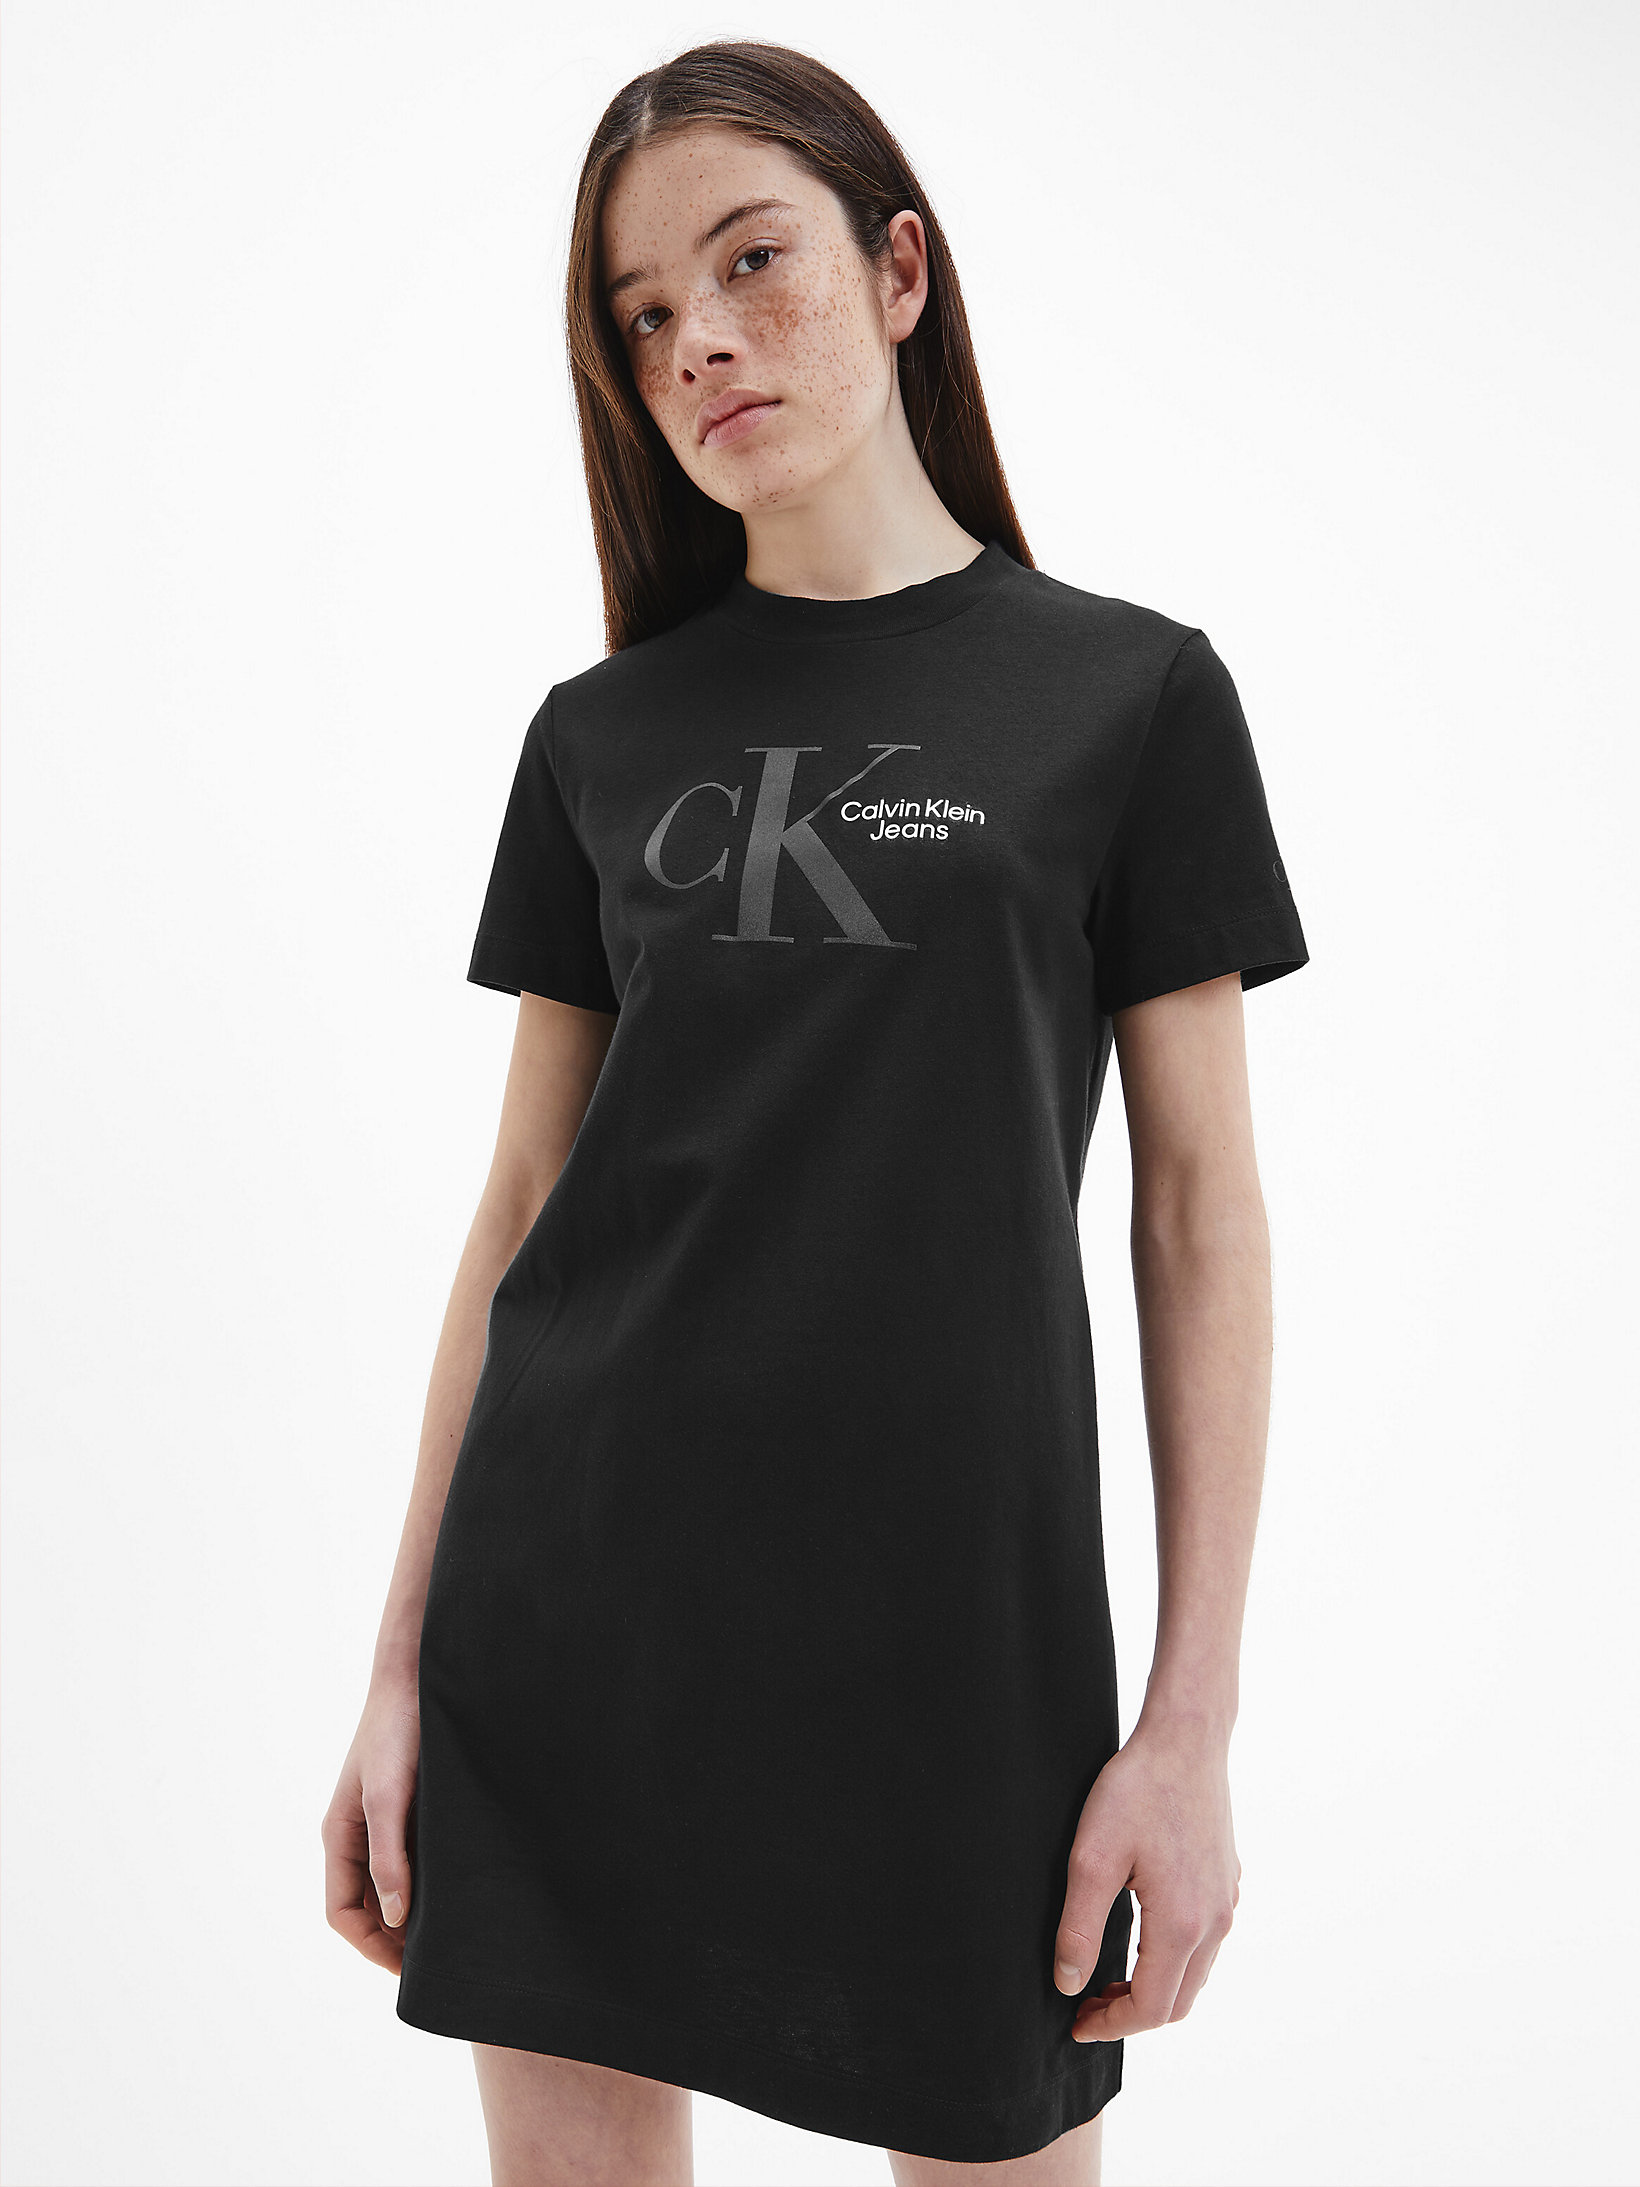 Robe T-Shirt Avec Monogramme > CK Black > undefined femmes > Calvin Klein